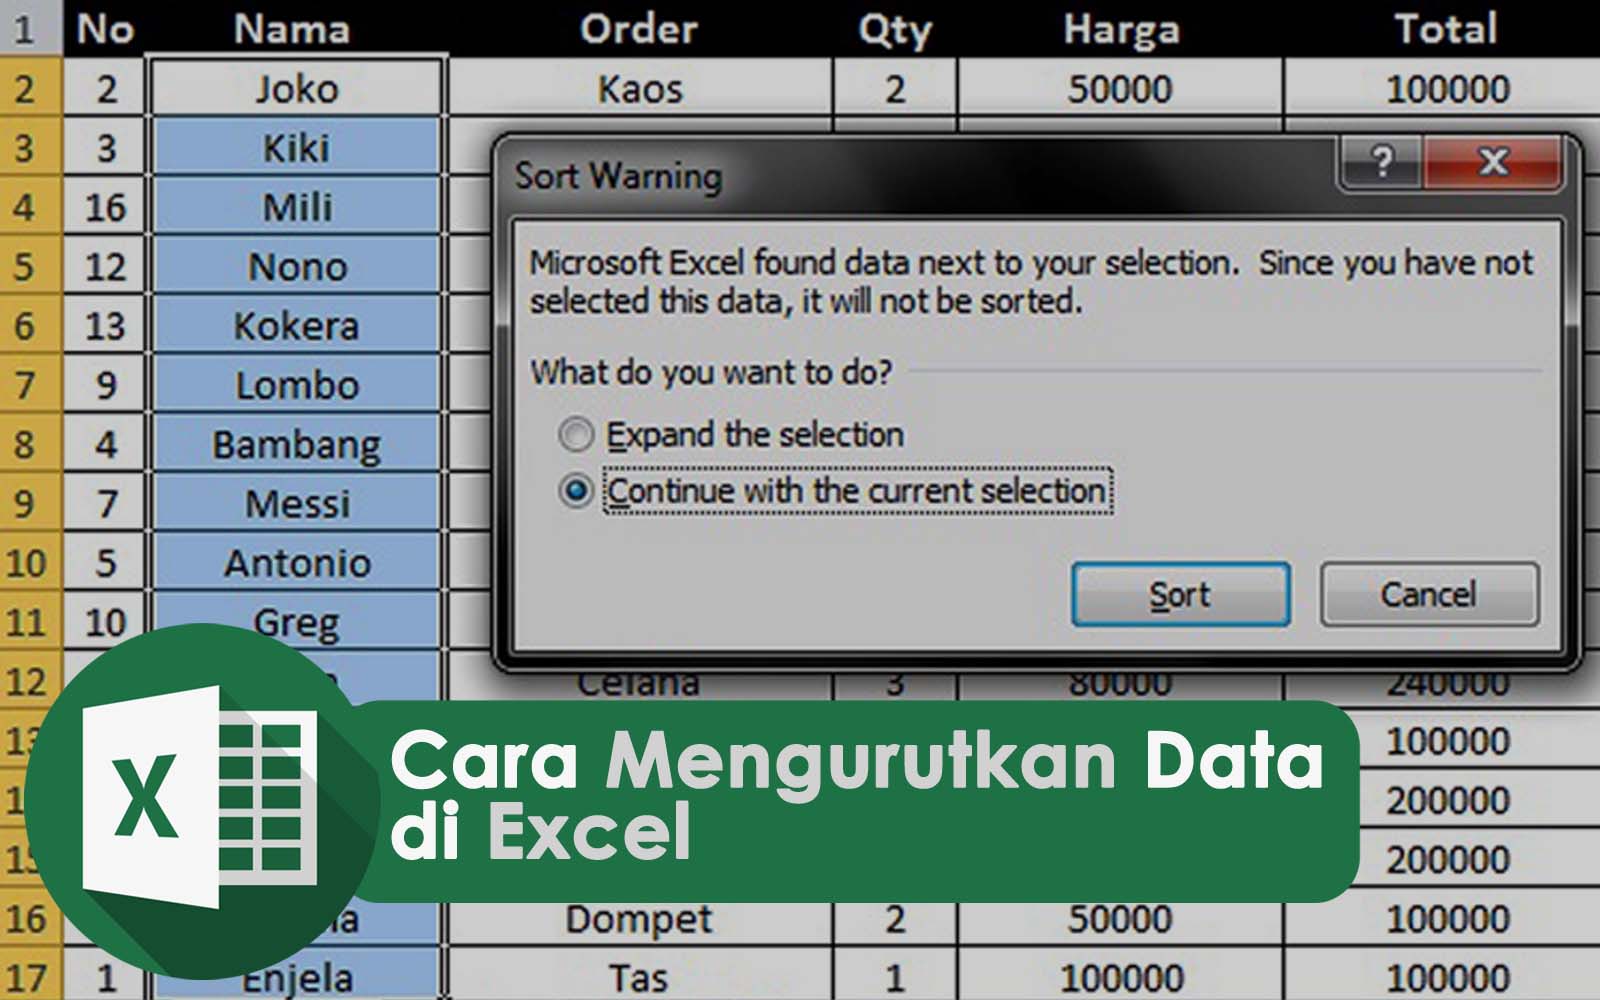 Cara Mengurutkan Data di Excel